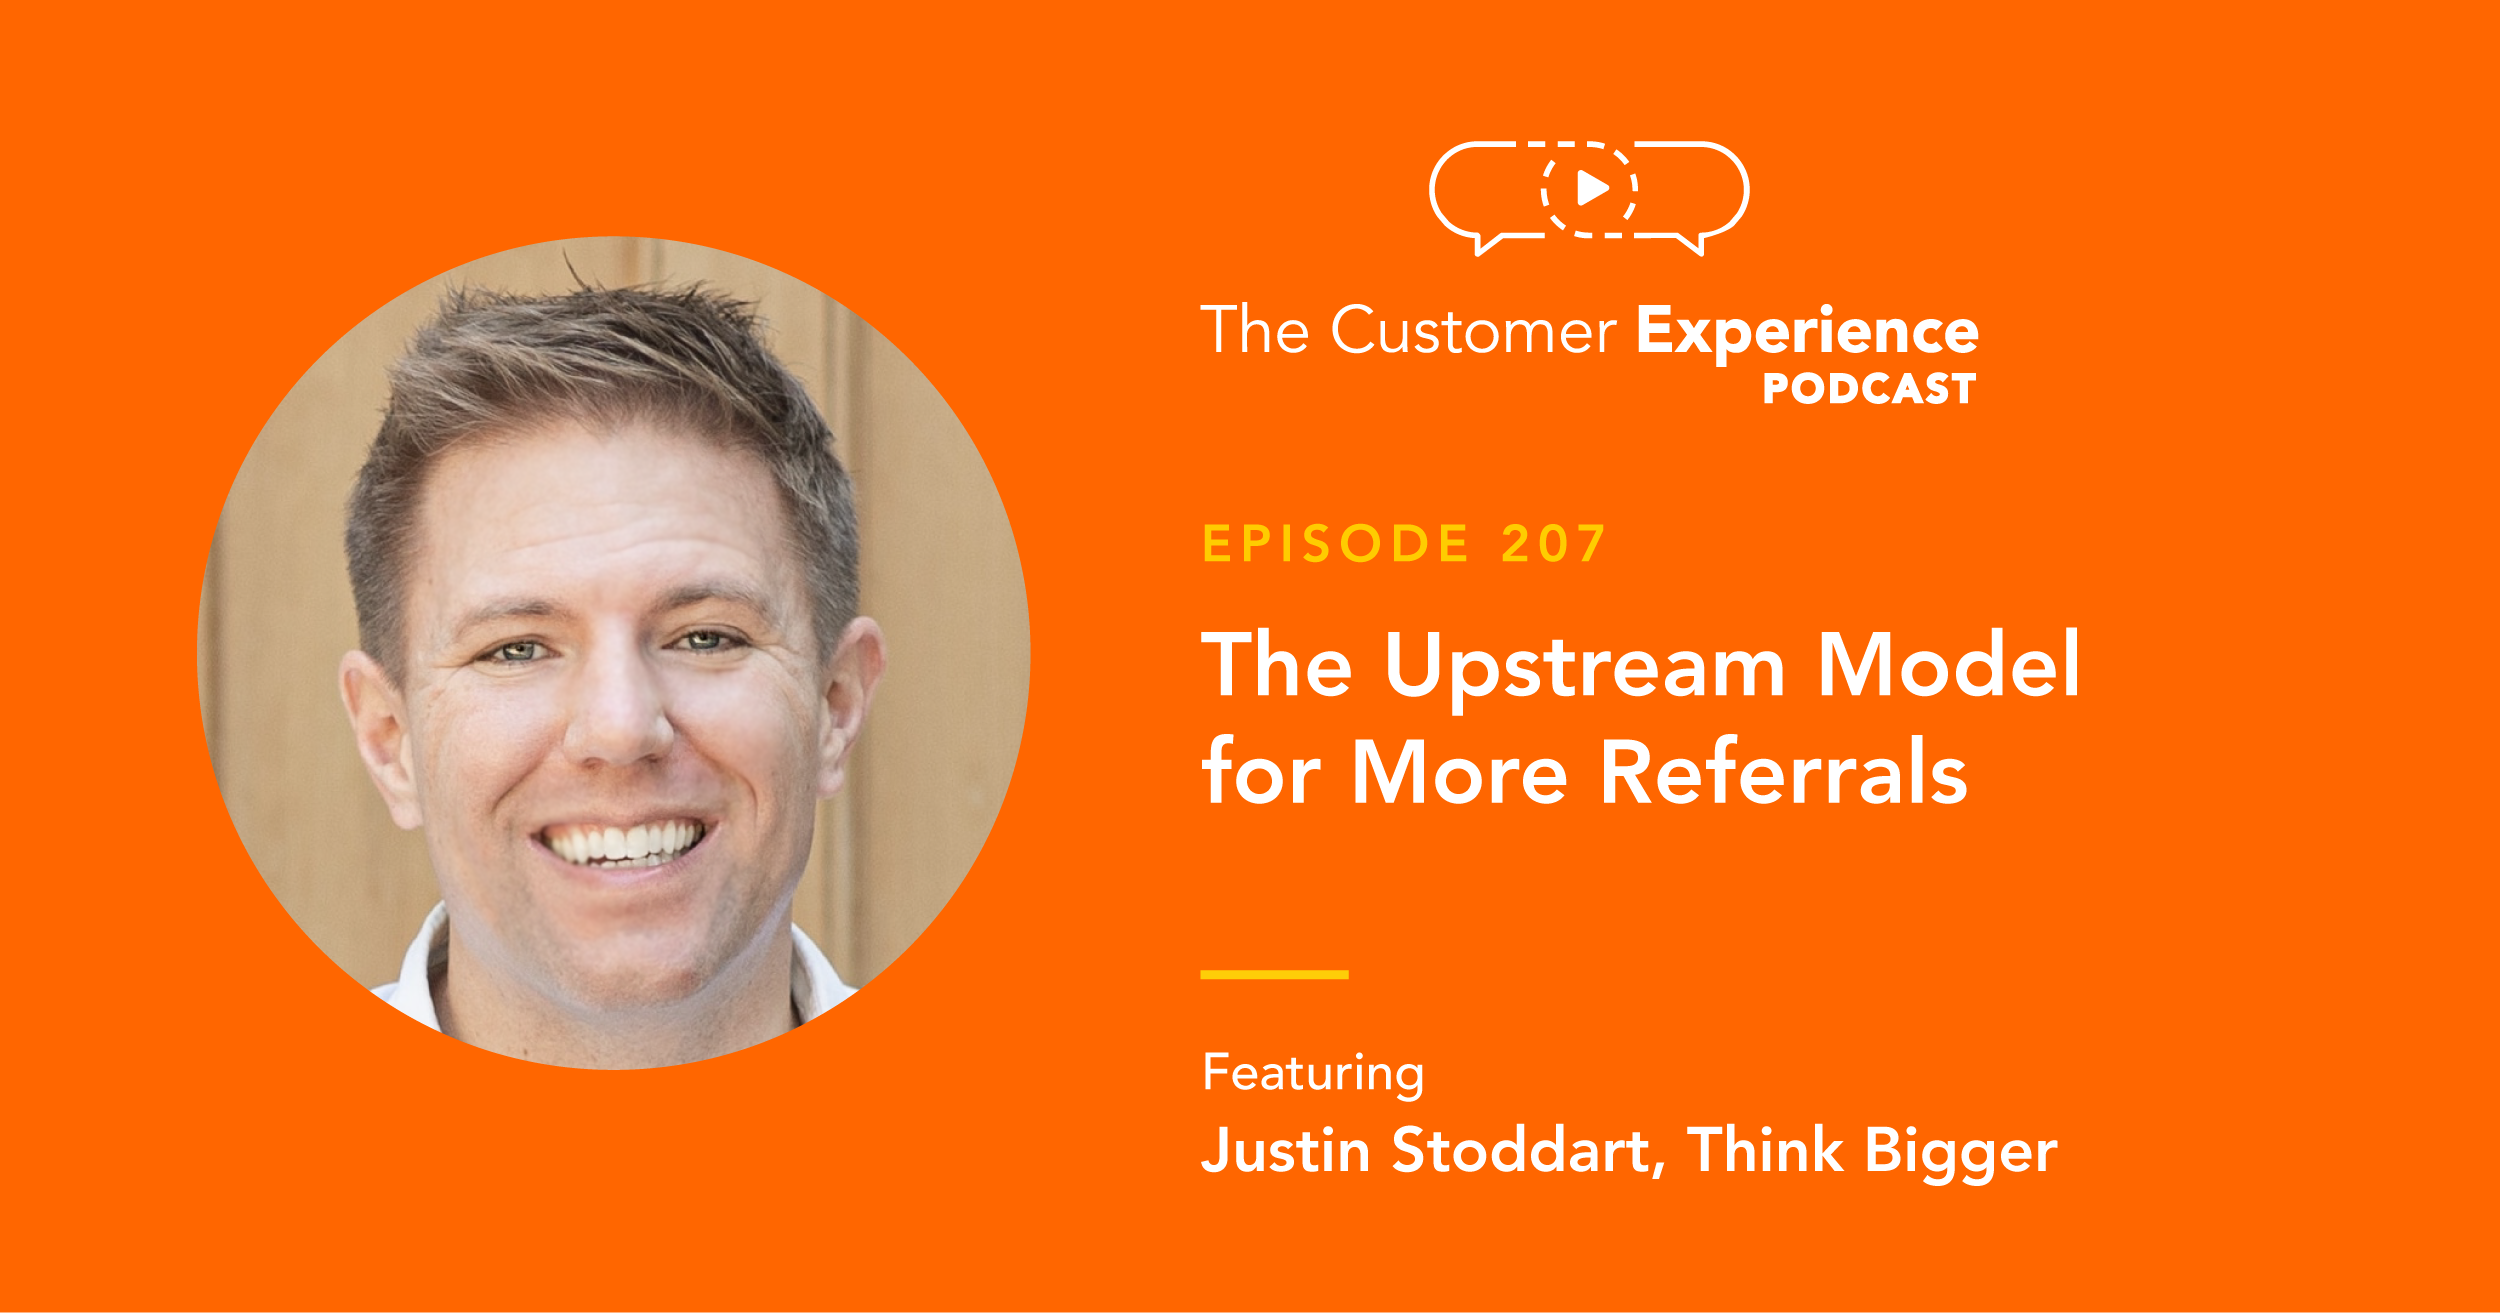 Justin Stoddart, Think Bigger, Upstream Model, The Customer Experience Podcast, referrals, earn referrals, referral business, real estate, mortgage, financial, strategic partner, referral partner, get referrals